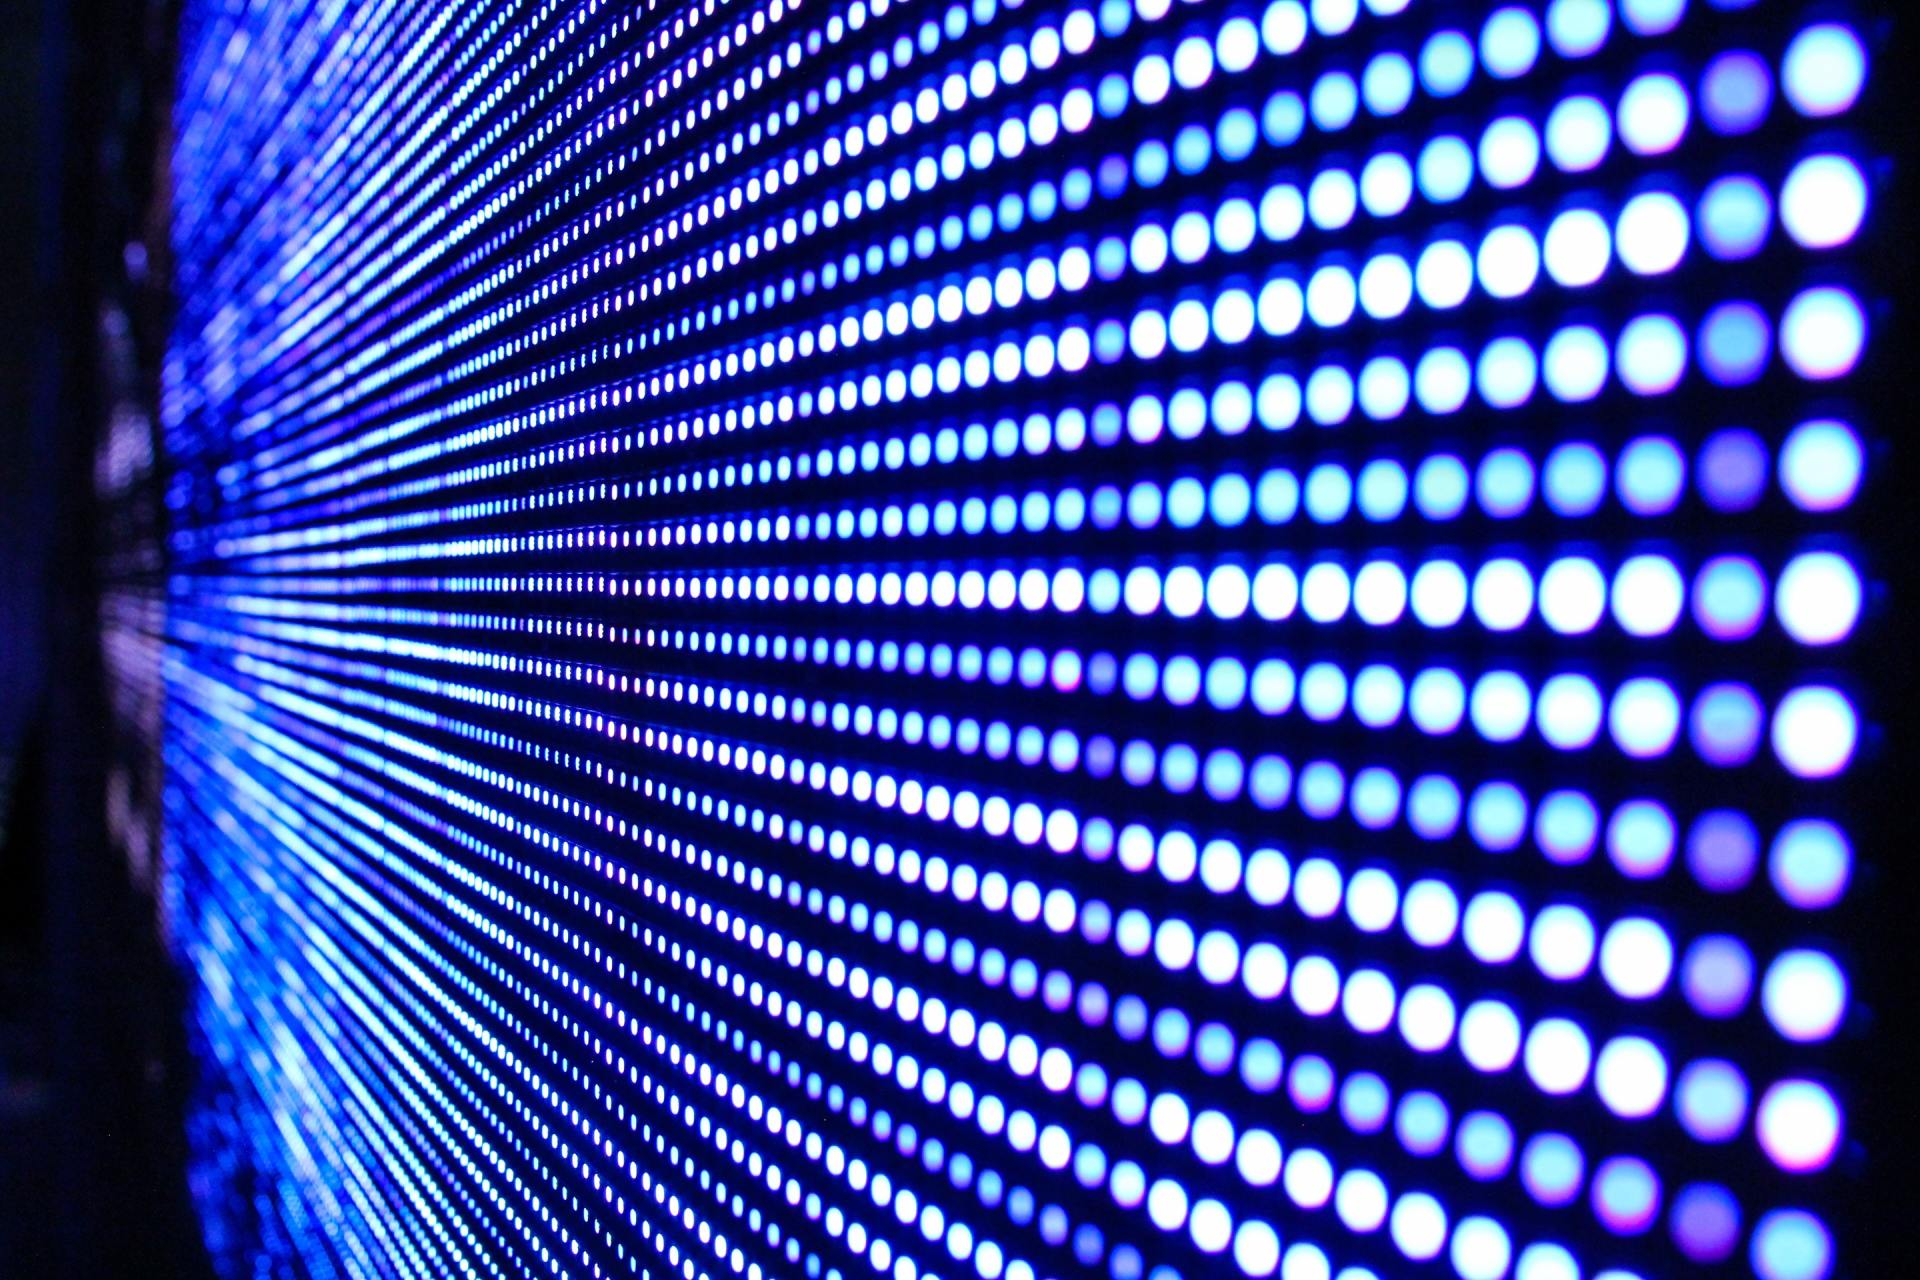 LED display close-up image